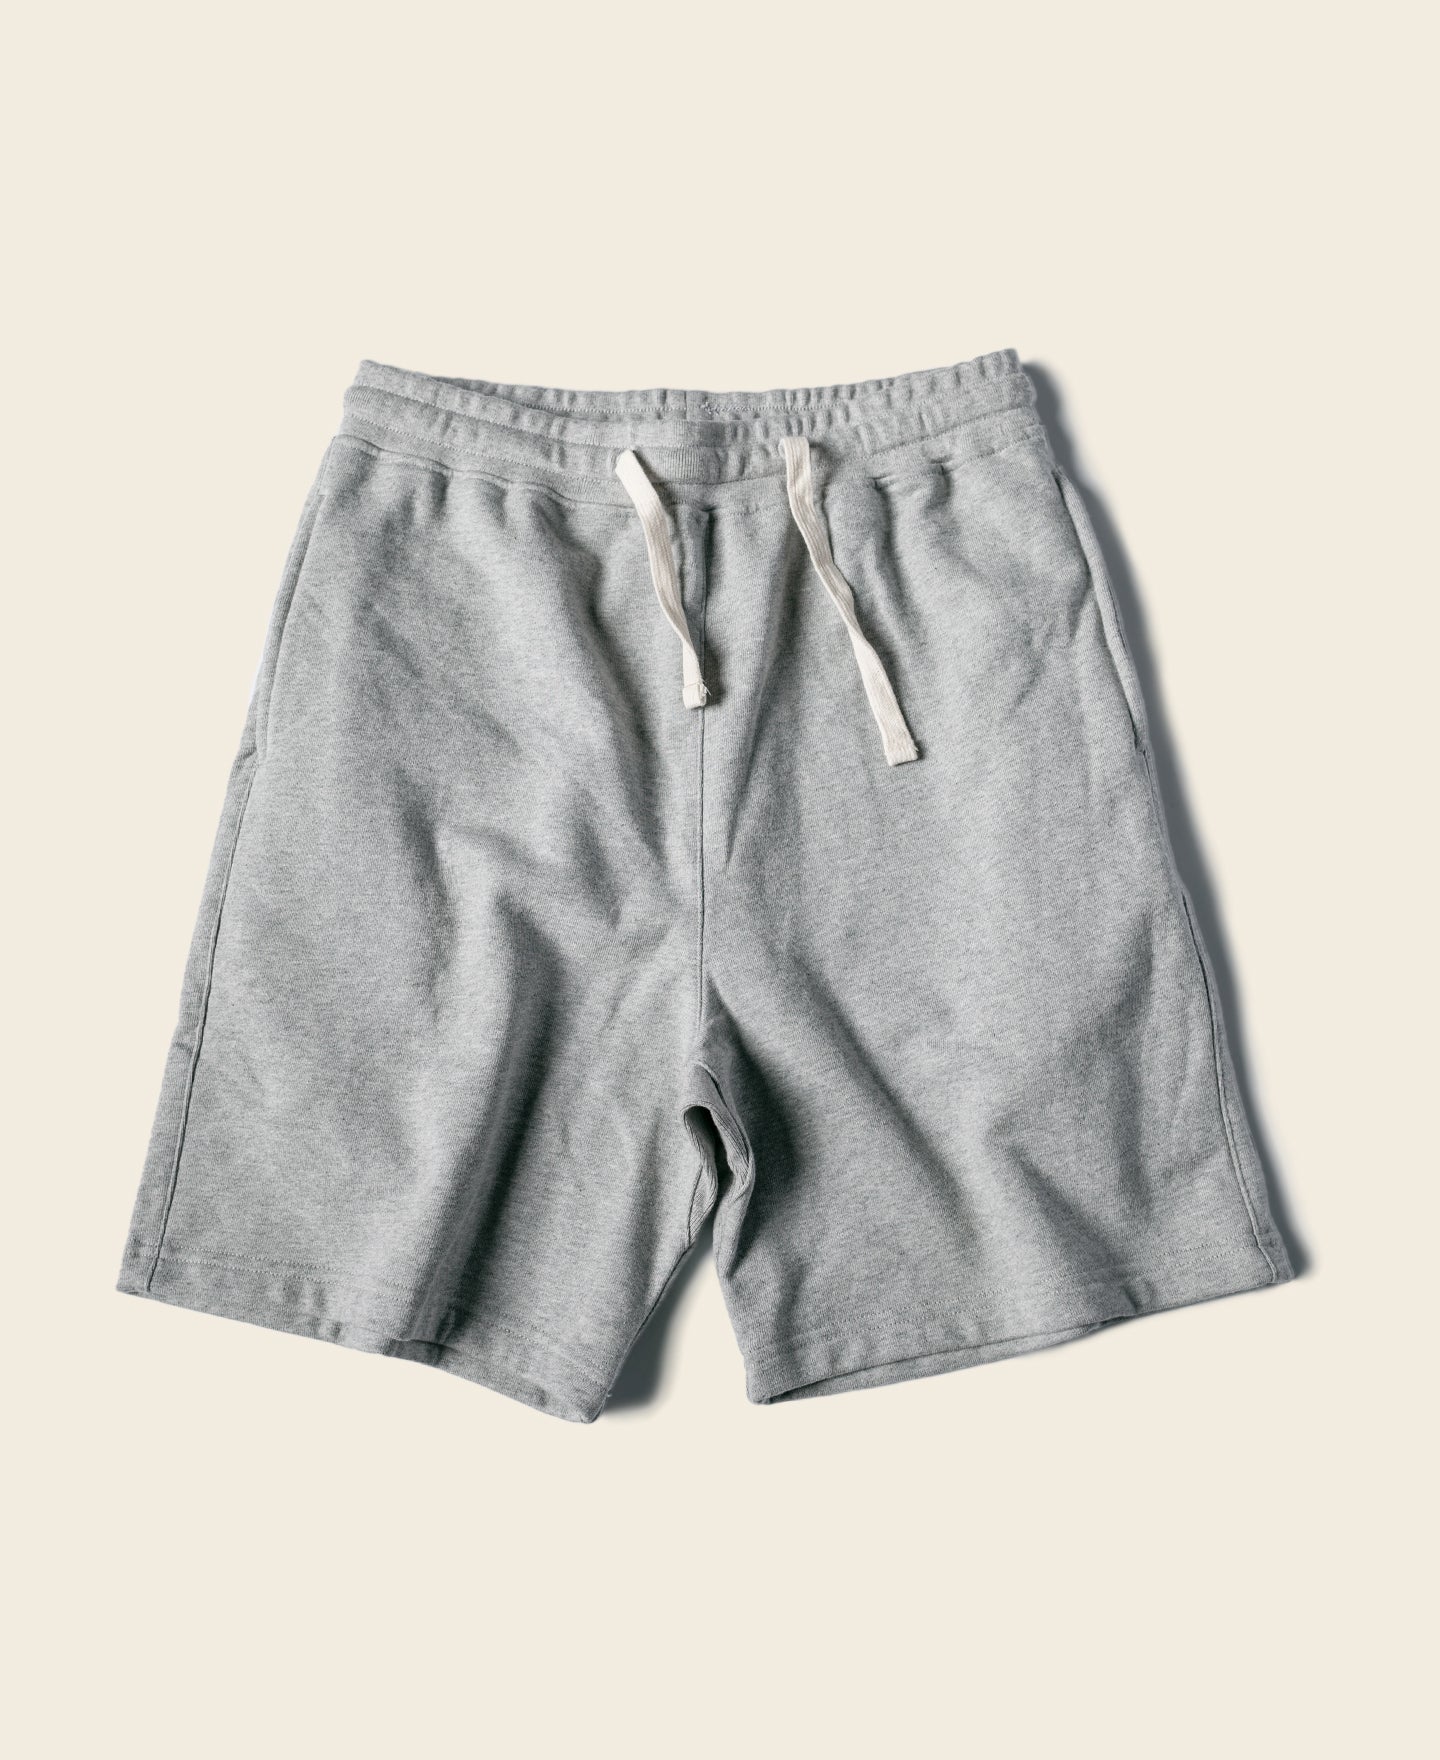 15 oz French Terry Sweat Shorts - Gray | Summer Sports Shorts | Bronson